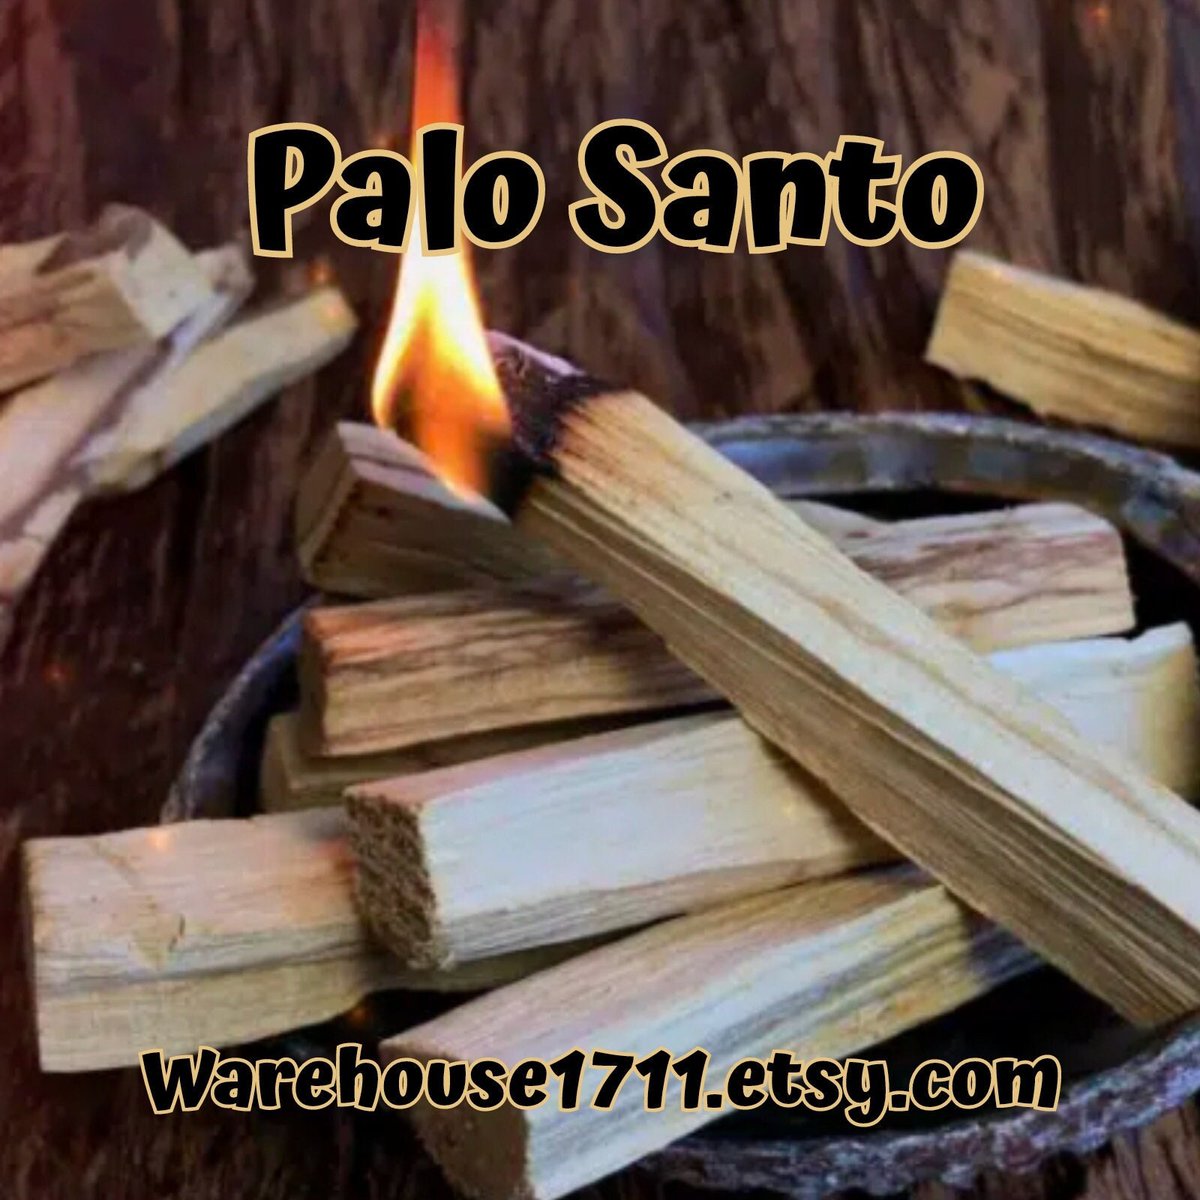 Palo Santo Candle/Bath/Body Fragrance Oil tuppu.net/d7a14b #candlemaker #explorepage #candleoils #Warehouse1711 #glitter #aromatheraphy #dtftransfers #handmadecandles #ScentOils